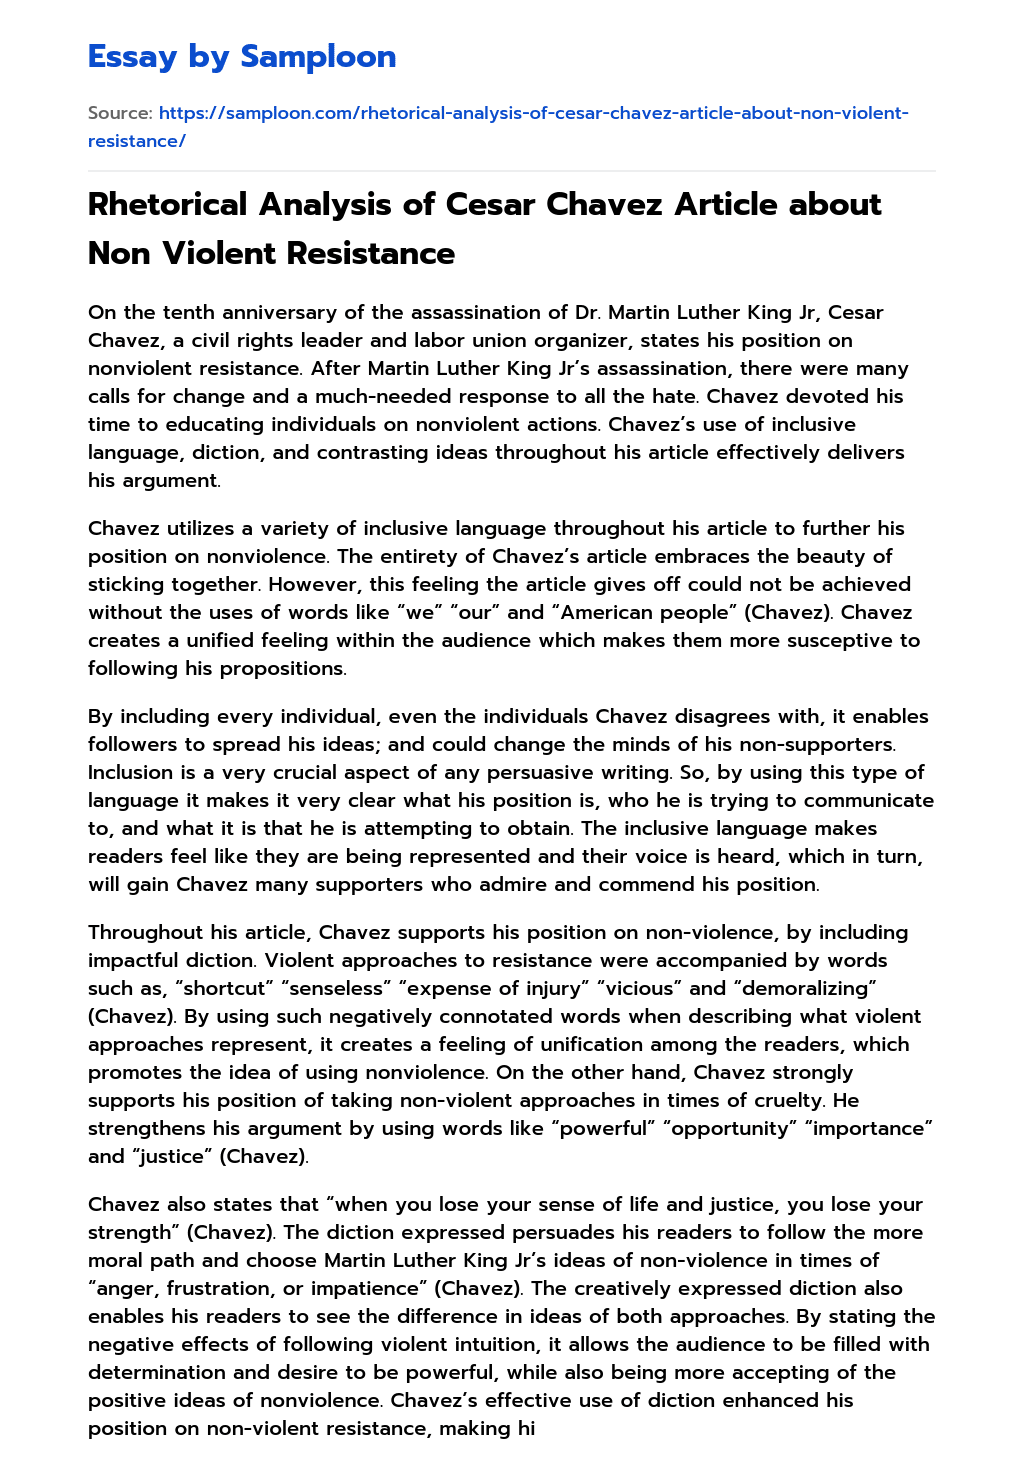 Rhetorical Analysis of Cesar Chavez Article about Non Violent Resistance essay